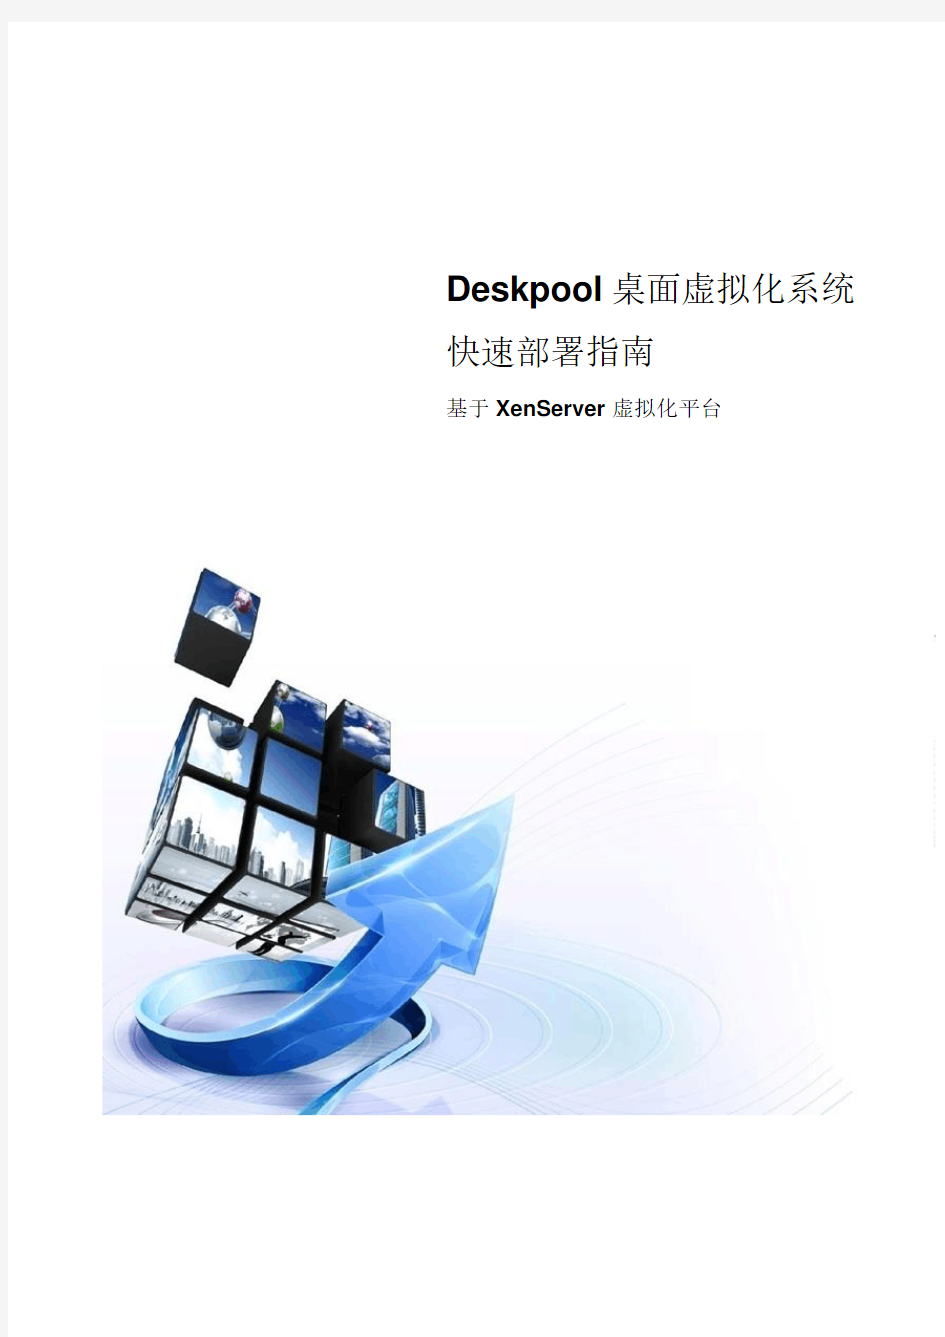 Deskpool桌面虚拟化系统快速部署指南